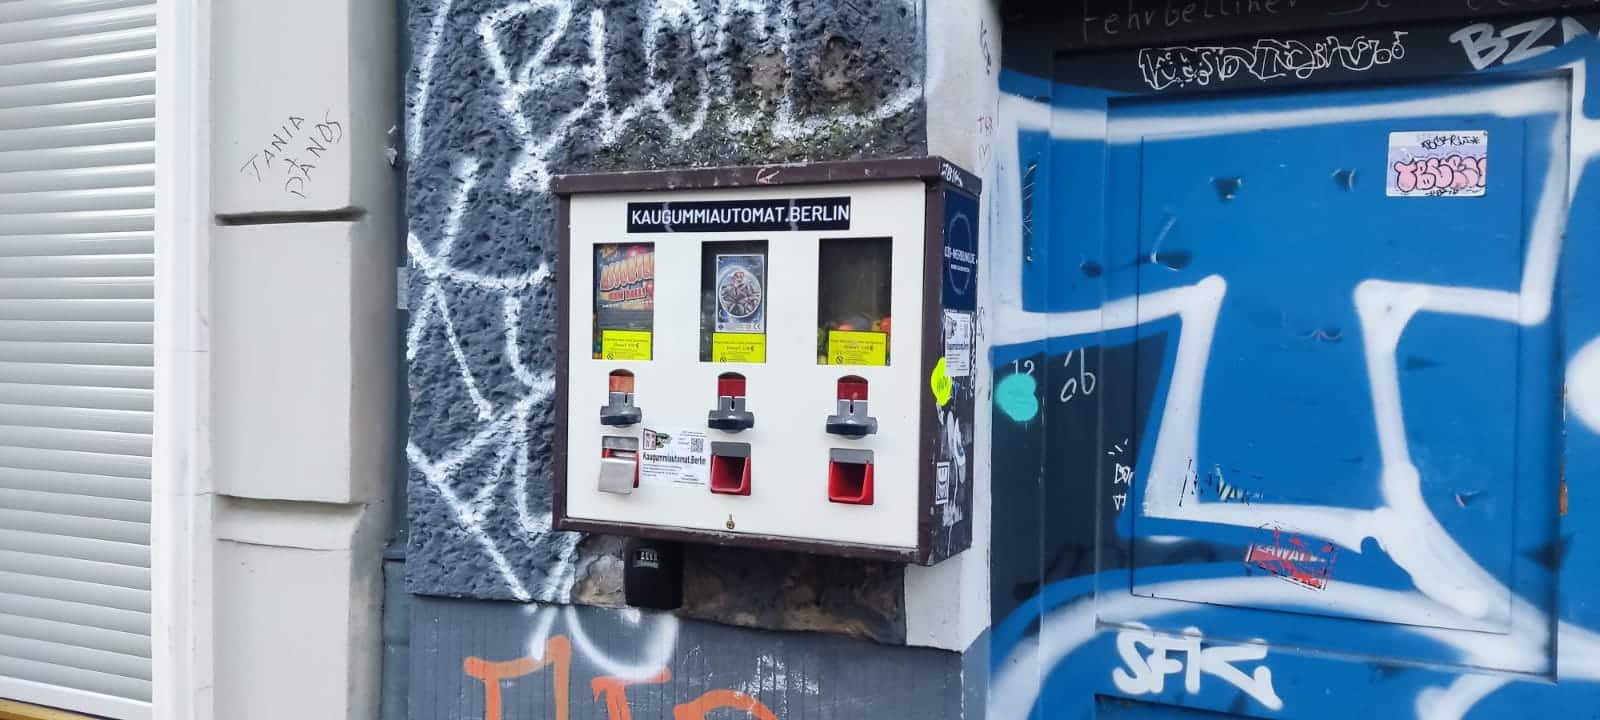 Kaugummiautomat braunes Gehäuse Berlin Mitte